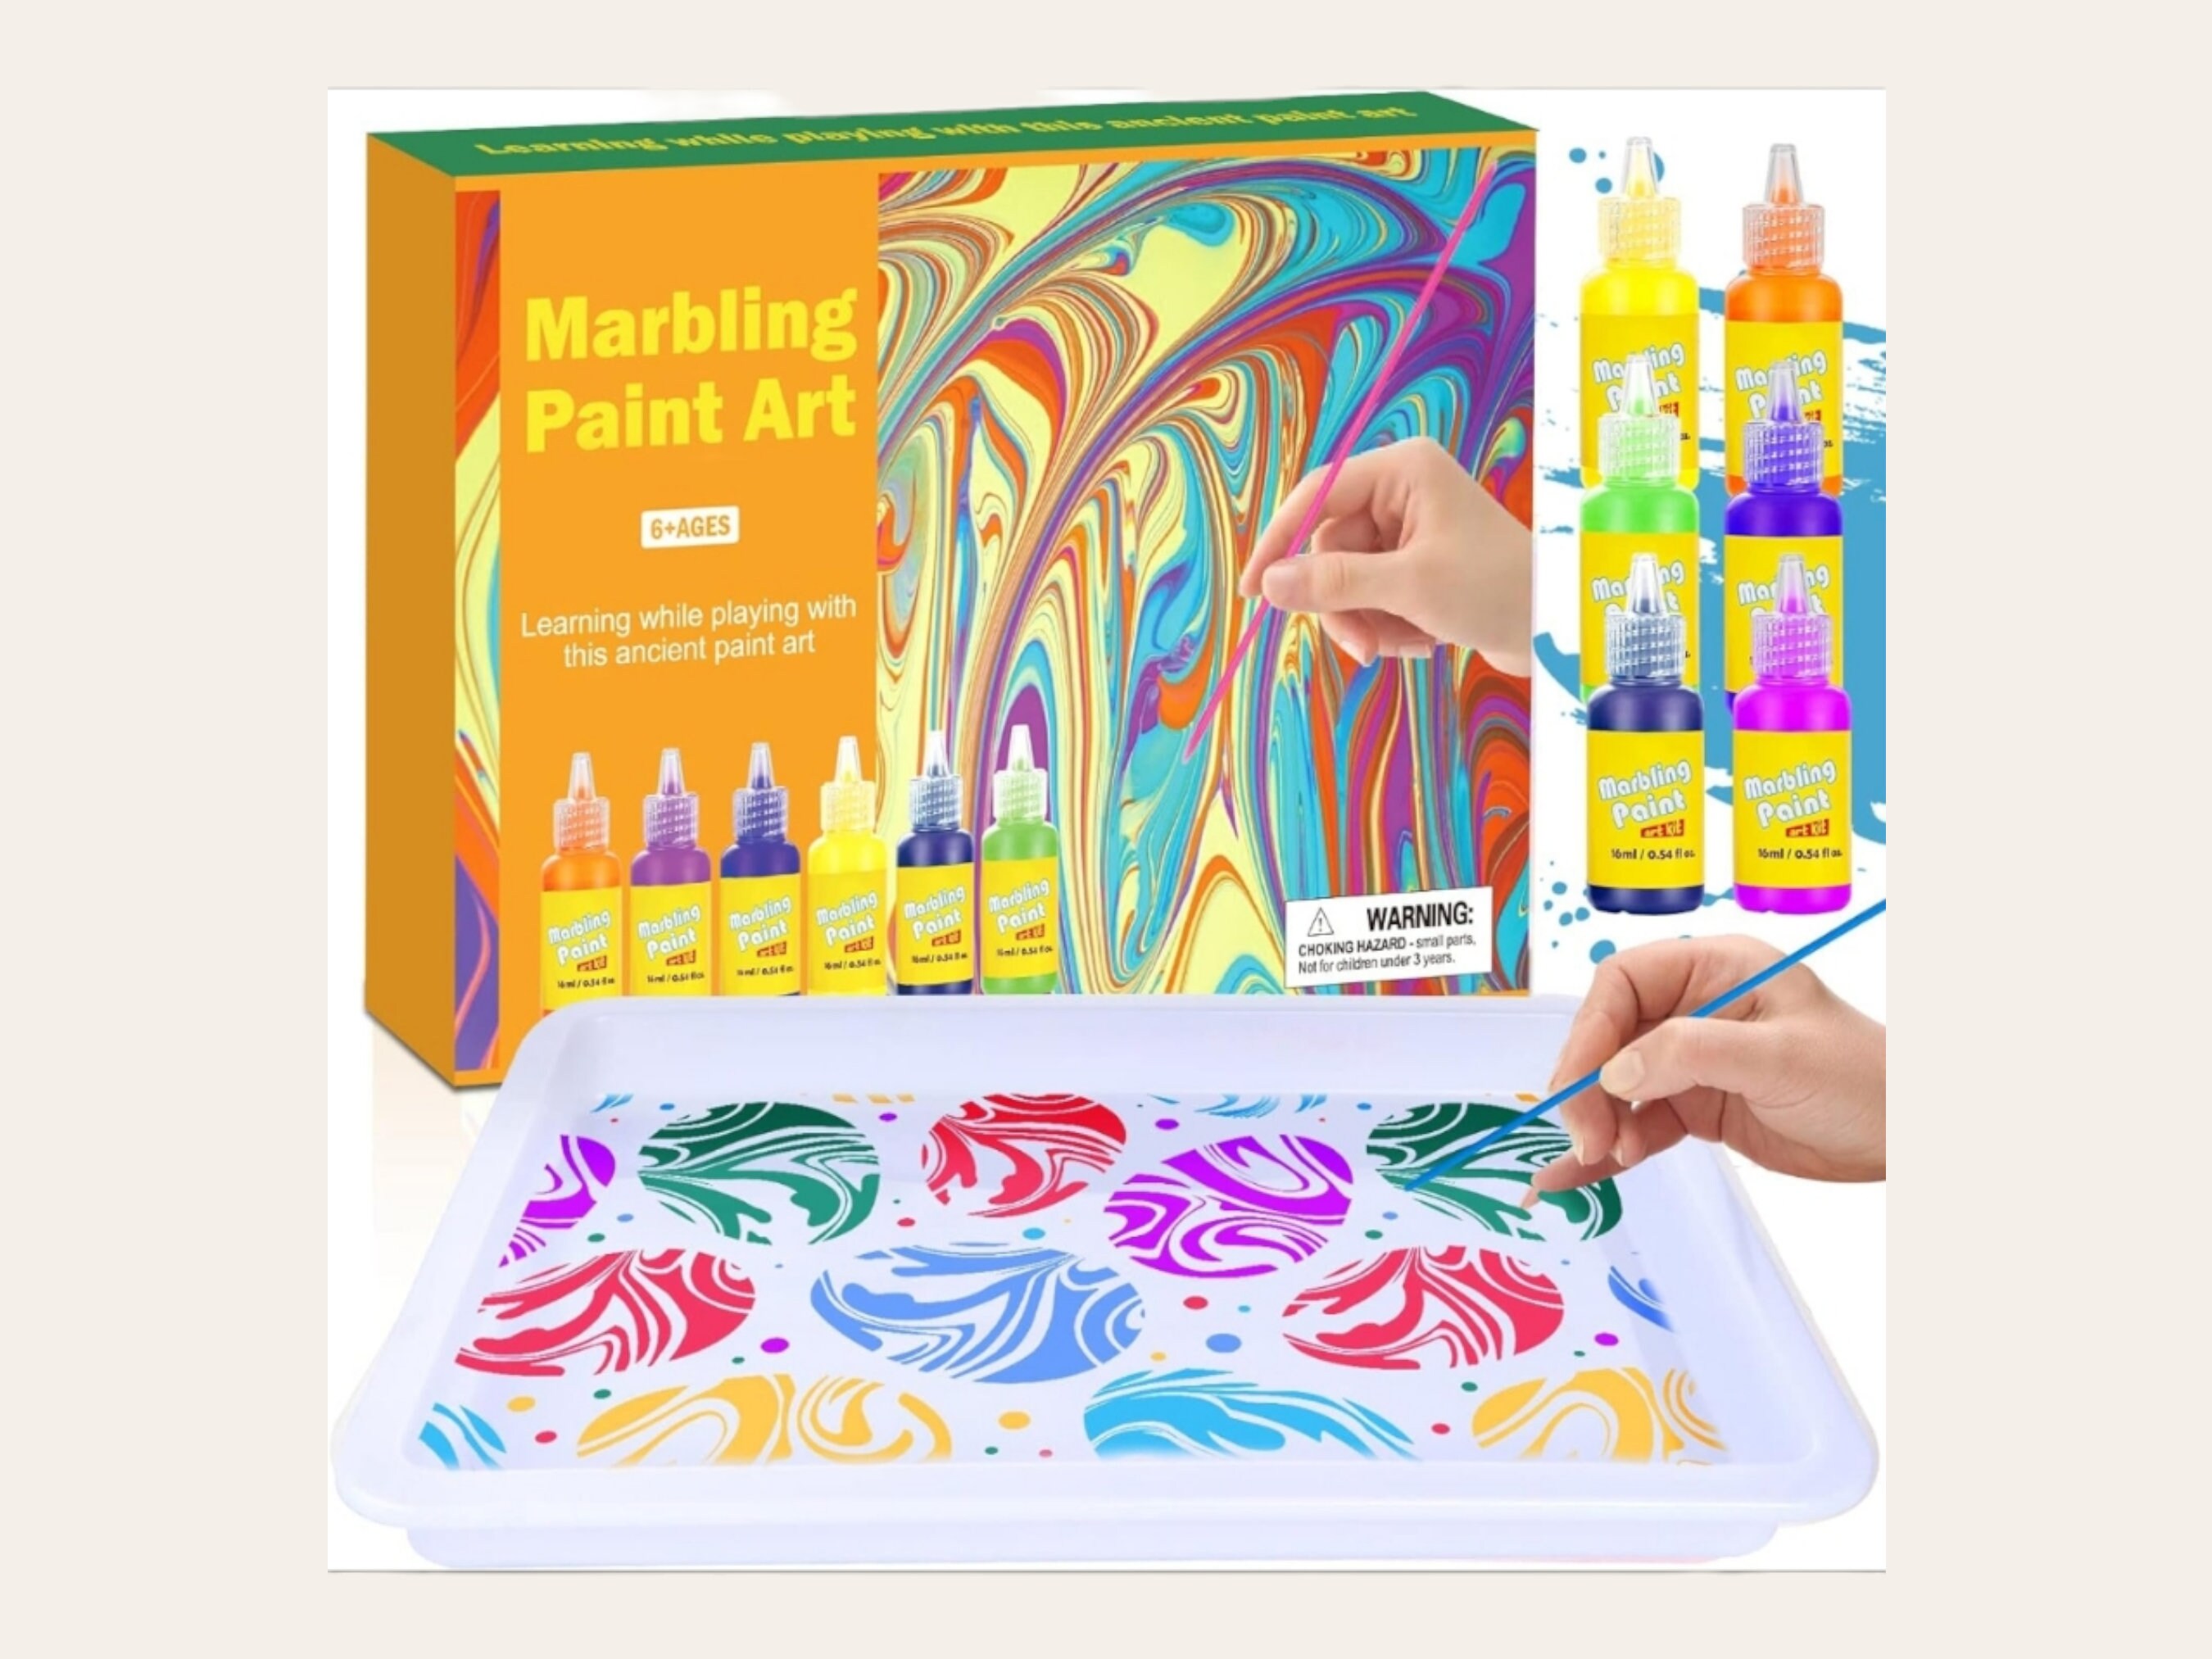 Marbling Paint Art Kit for Kids - Arts and Crafts El Salvador